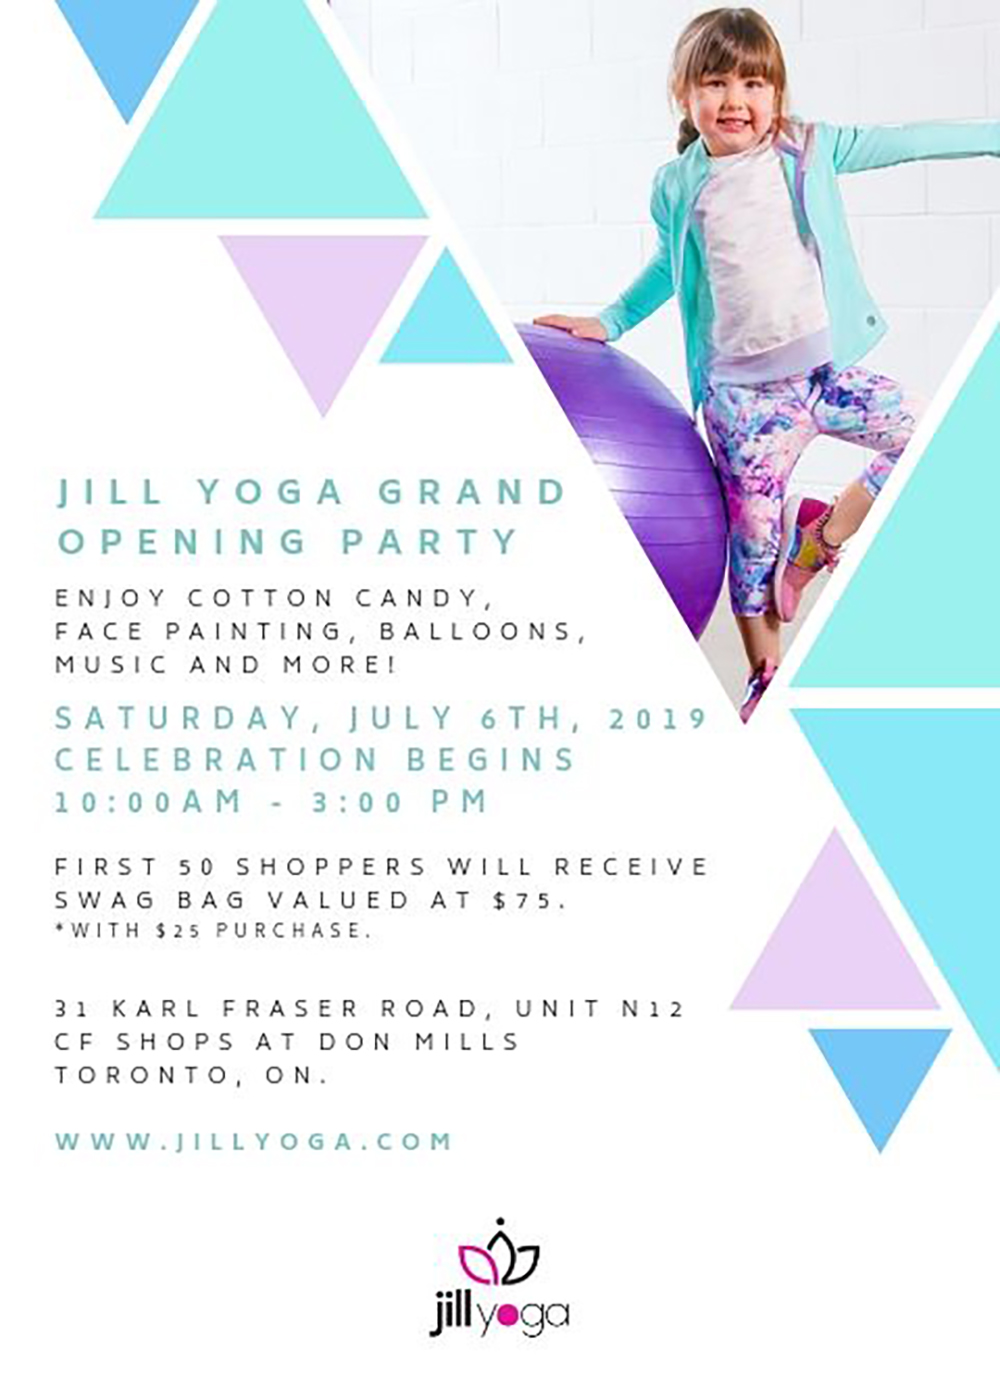 https://viewthevibe.com/wp-content/uploads/2019/06/Jill-Yoga-Grand-Opening-Party-Invite-5.jpg